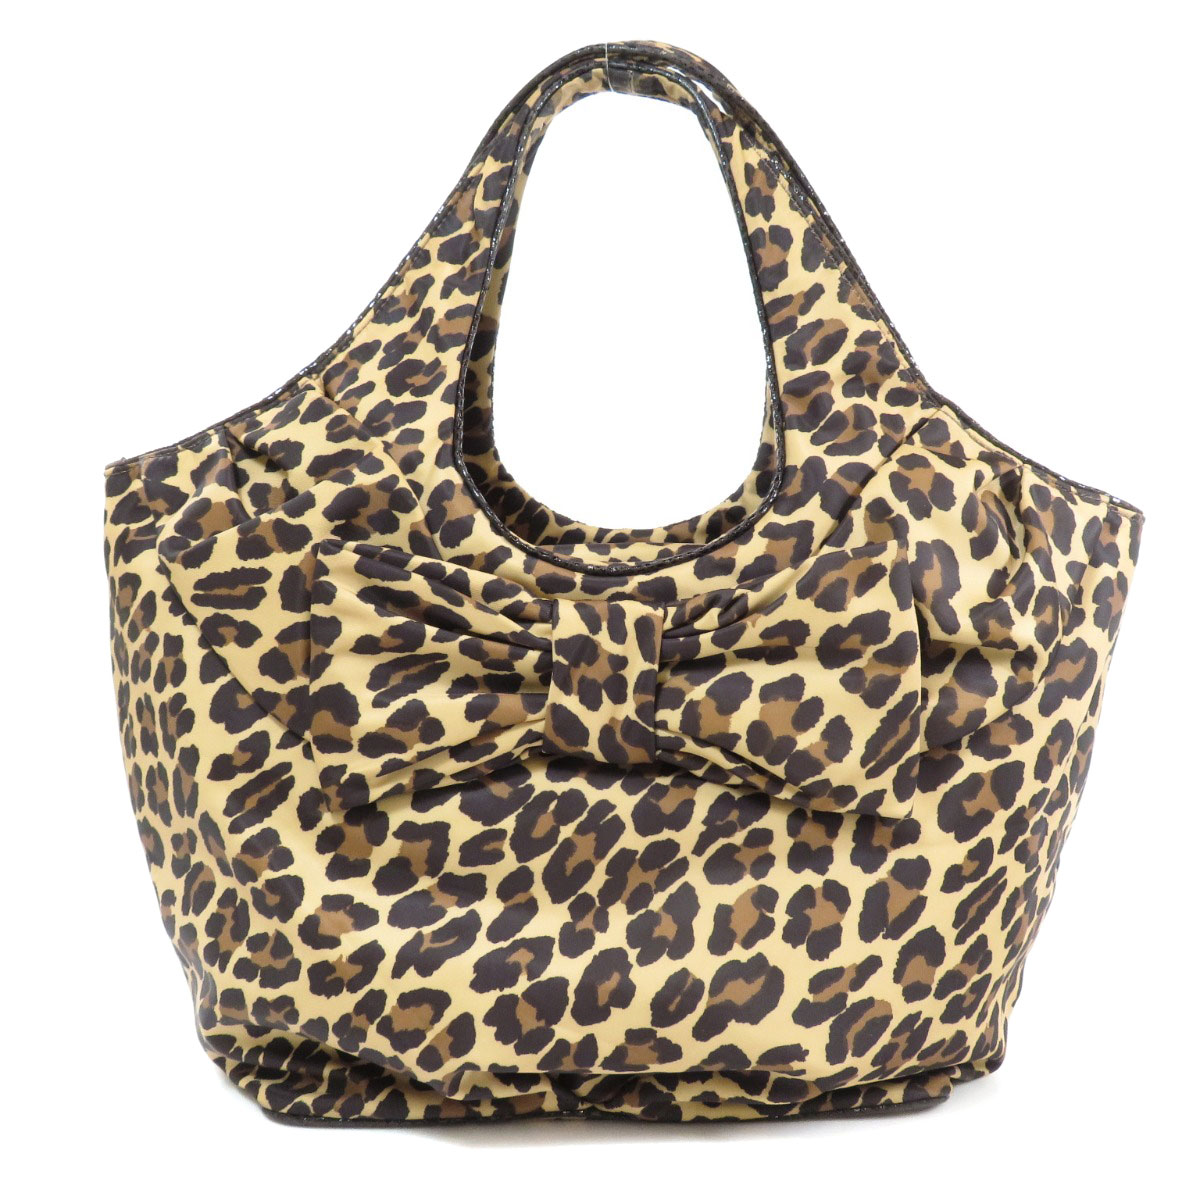 kate spade Tote Bag Leopard pattern Nylon | eBay